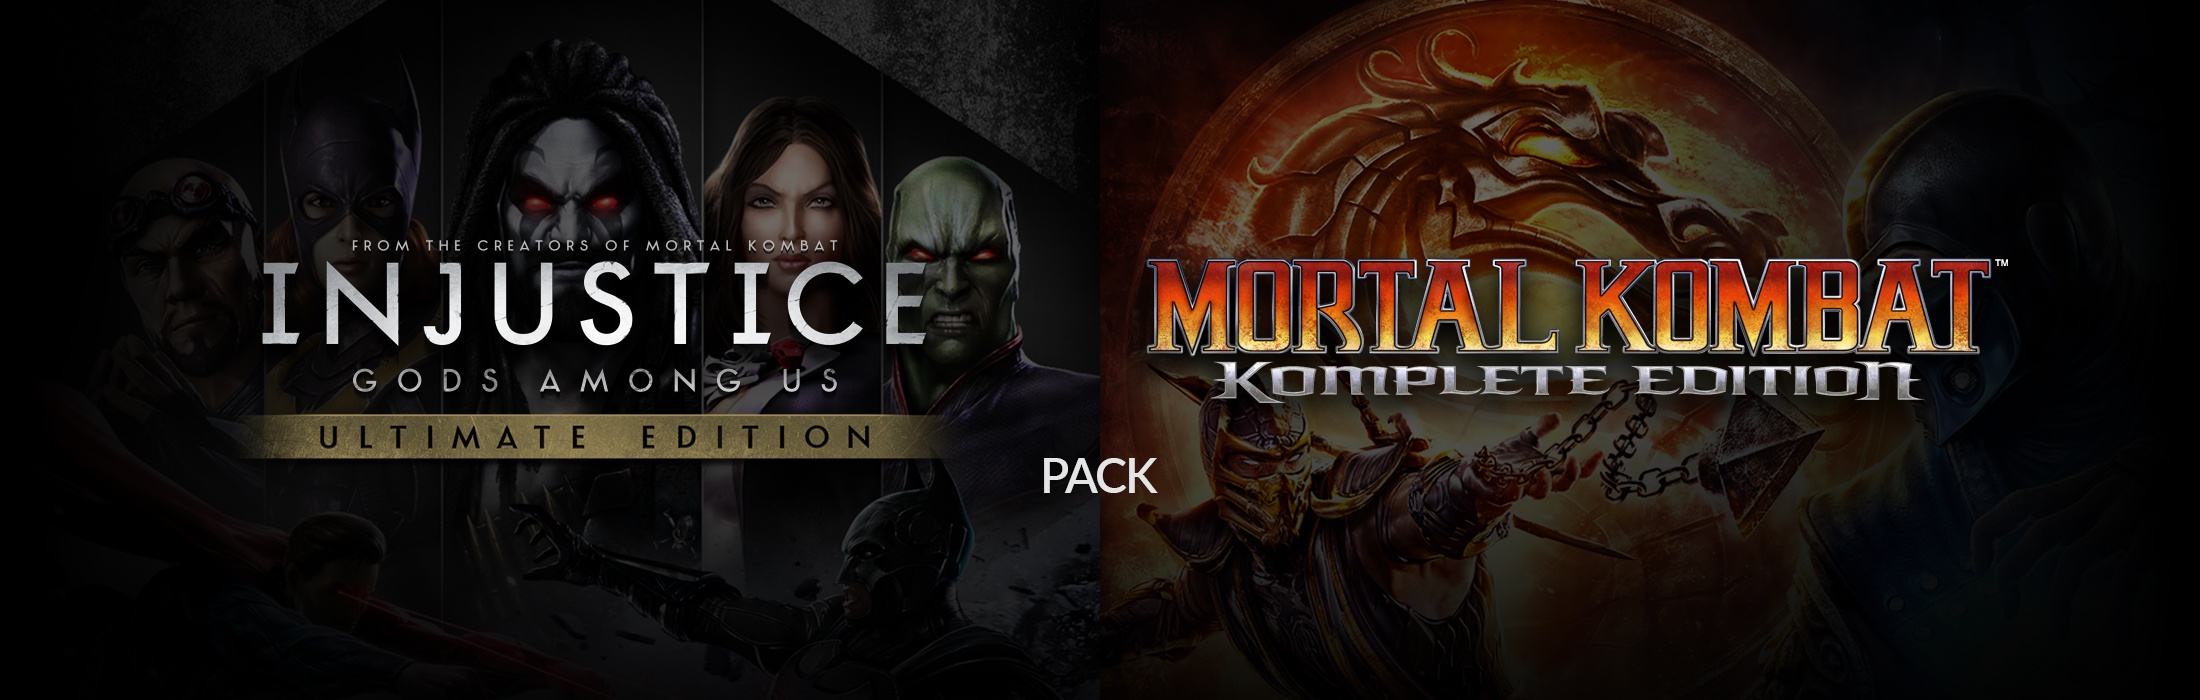 Injustice vs Mortal Kombat Pack solo 4,99€